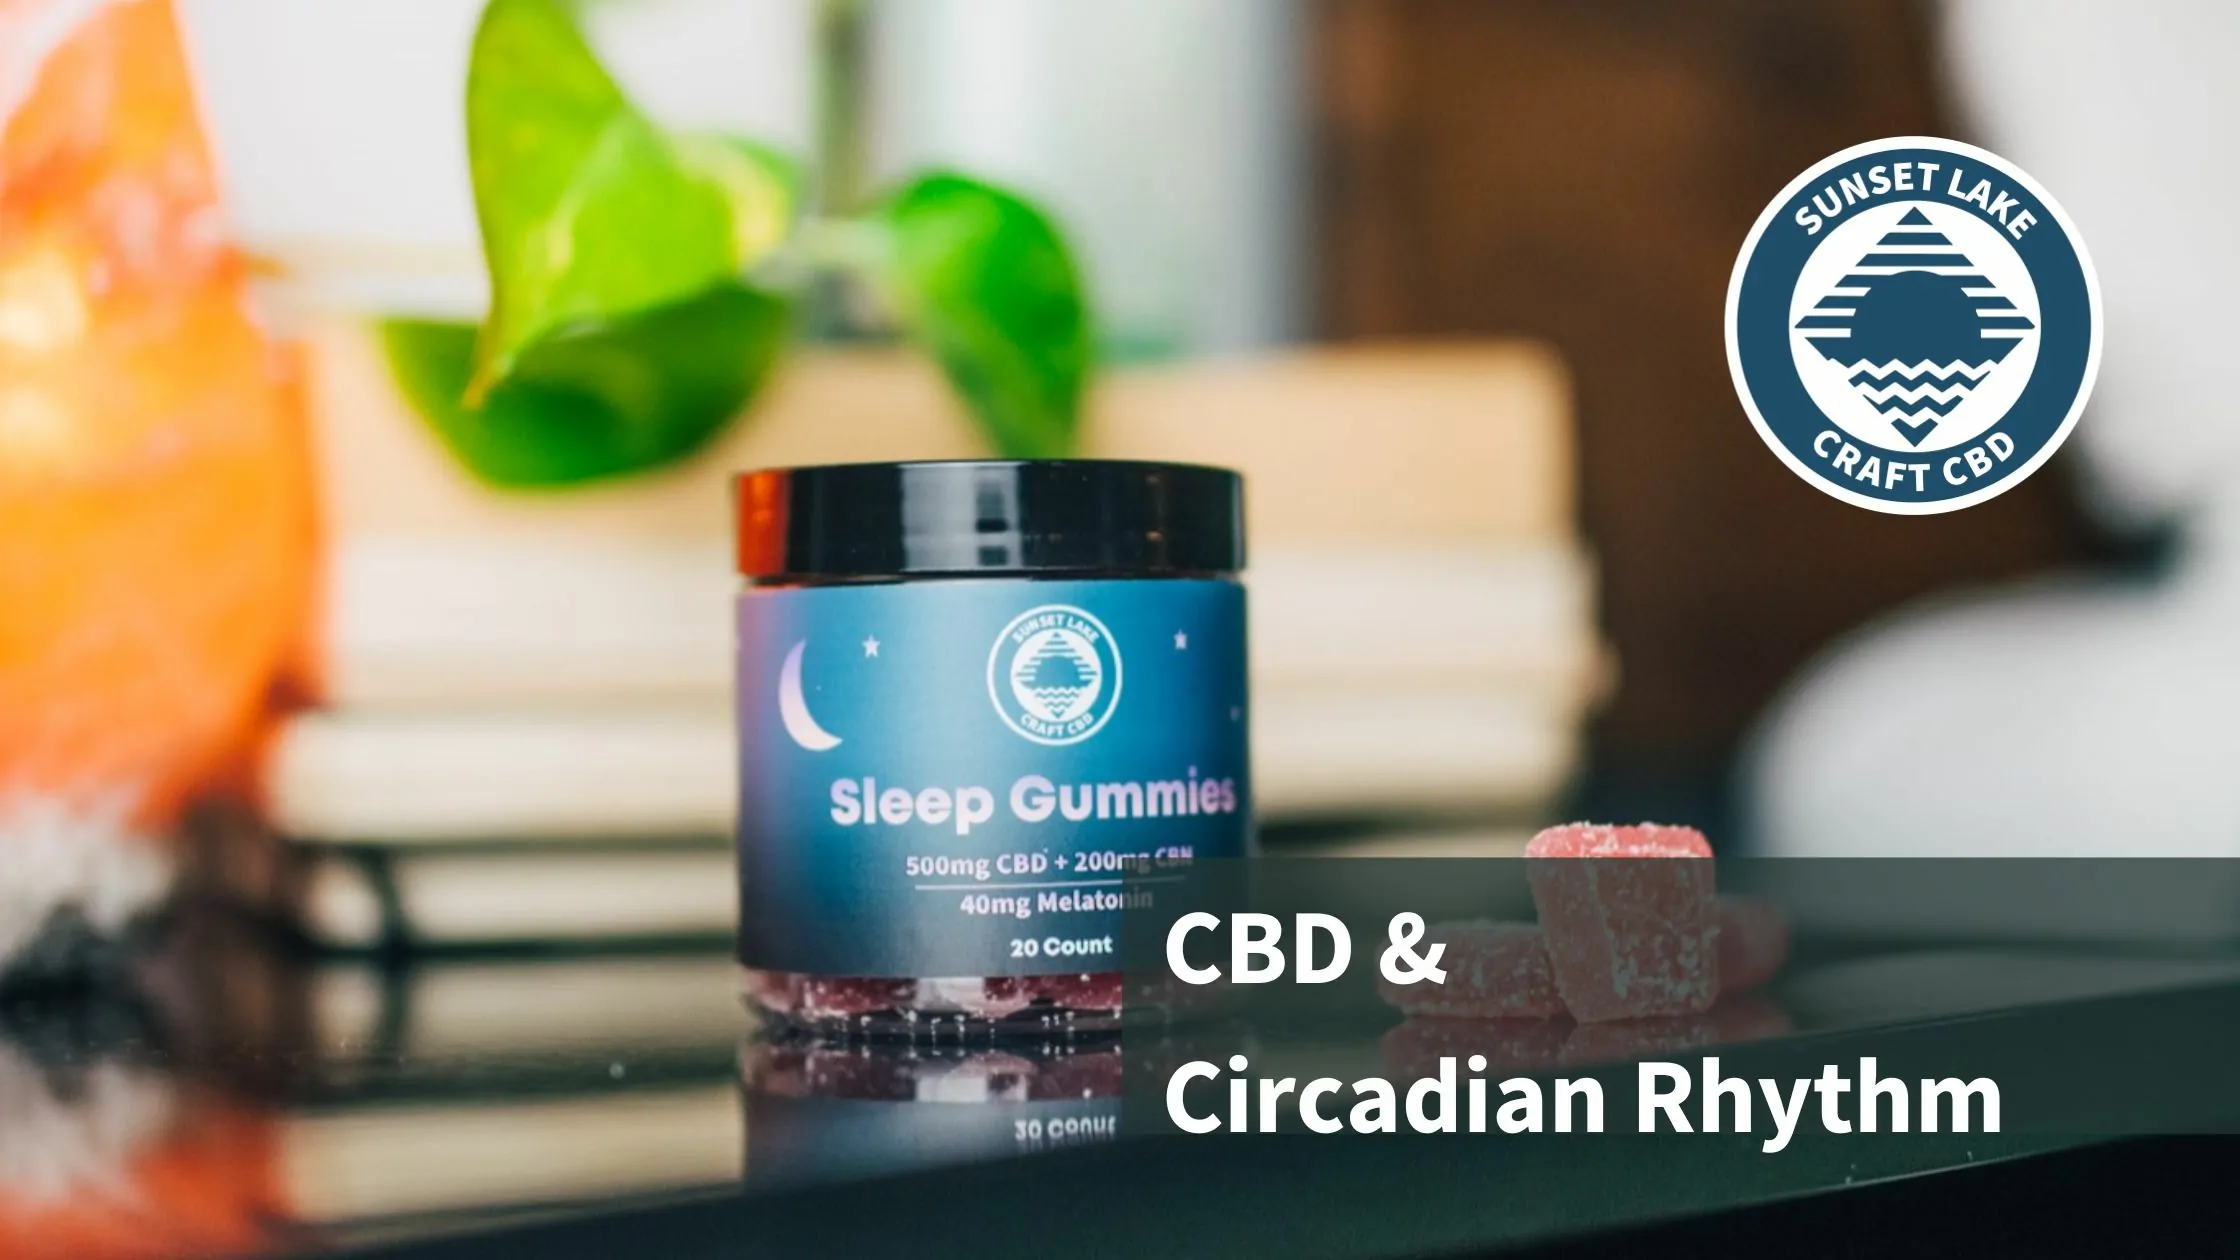 A jar of CBD Sleep Gummies on a nightstand. Text overlaid reads "CBD & Circadian Rhythm"